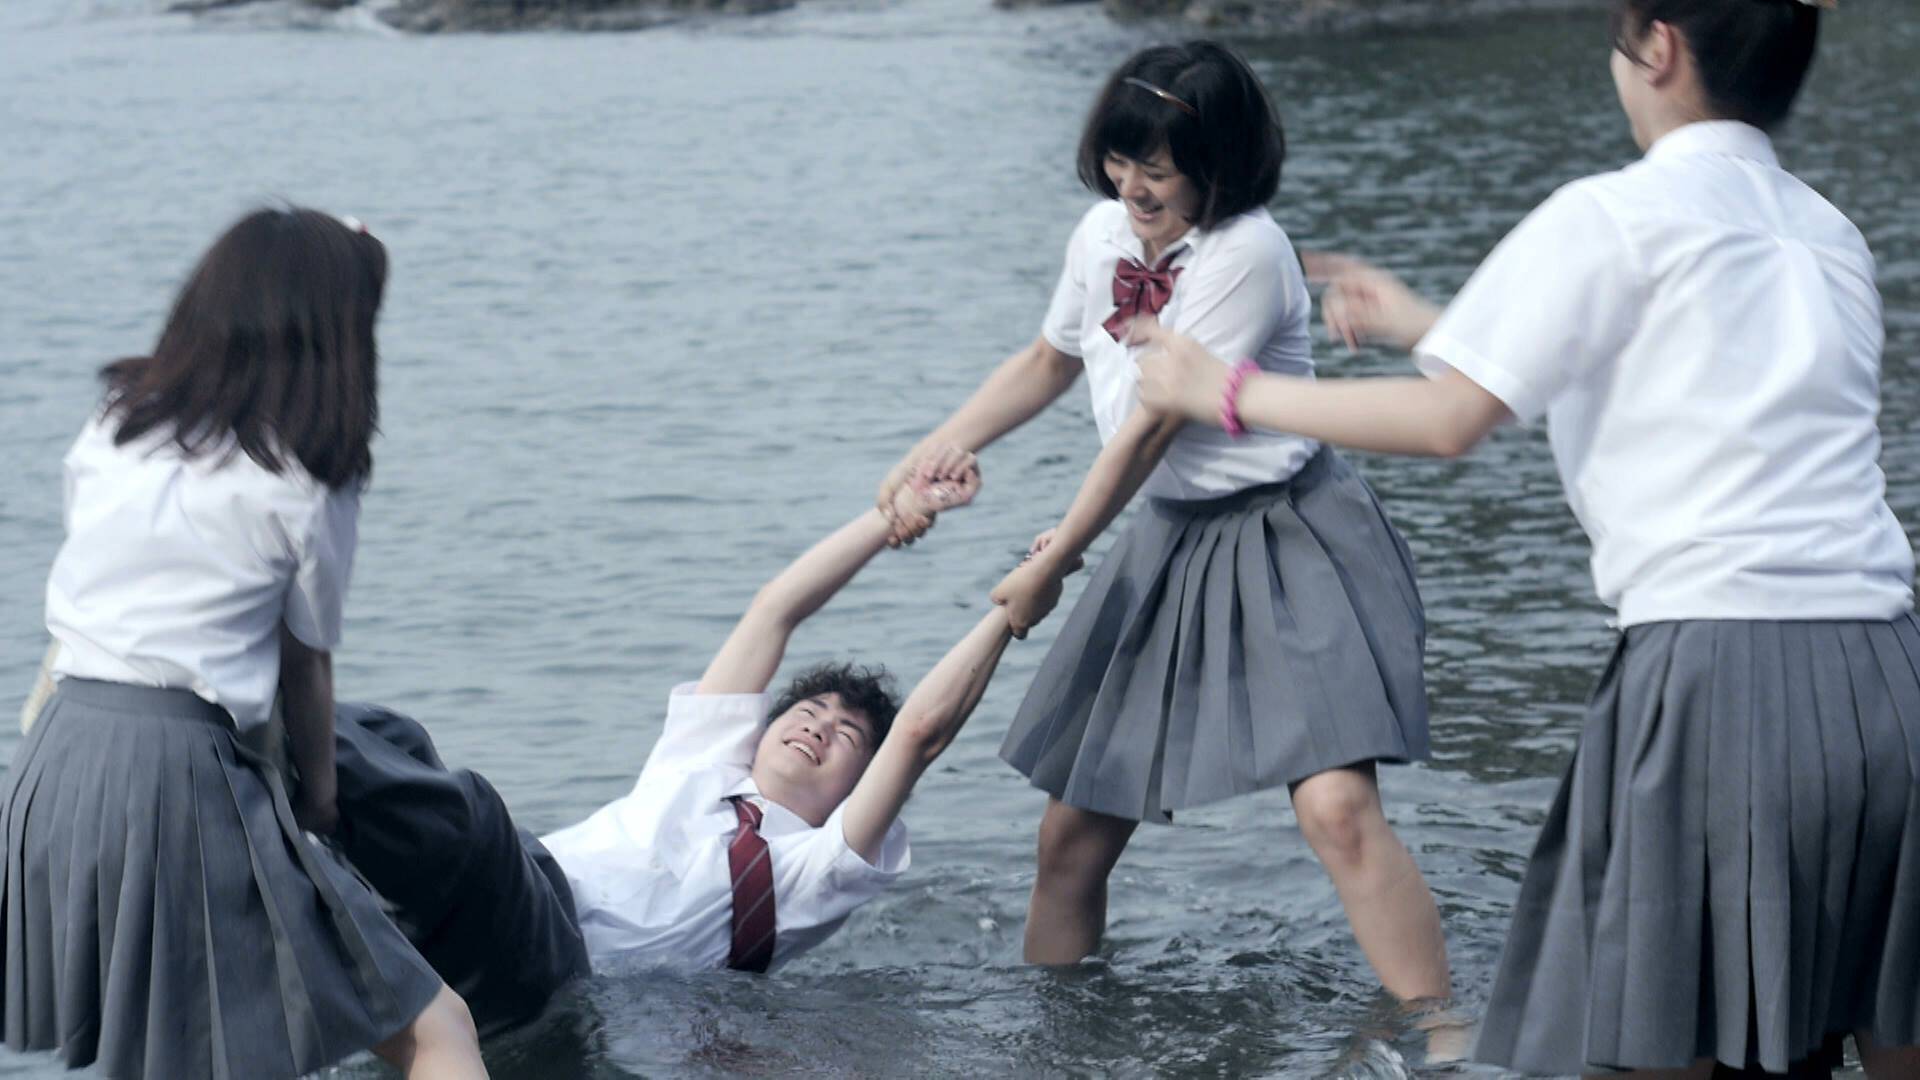 Jkの集団妊娠を描く映画 リュウグウノツカイ Gyao で無料公開中 16年5月24日 エキサイトニュース